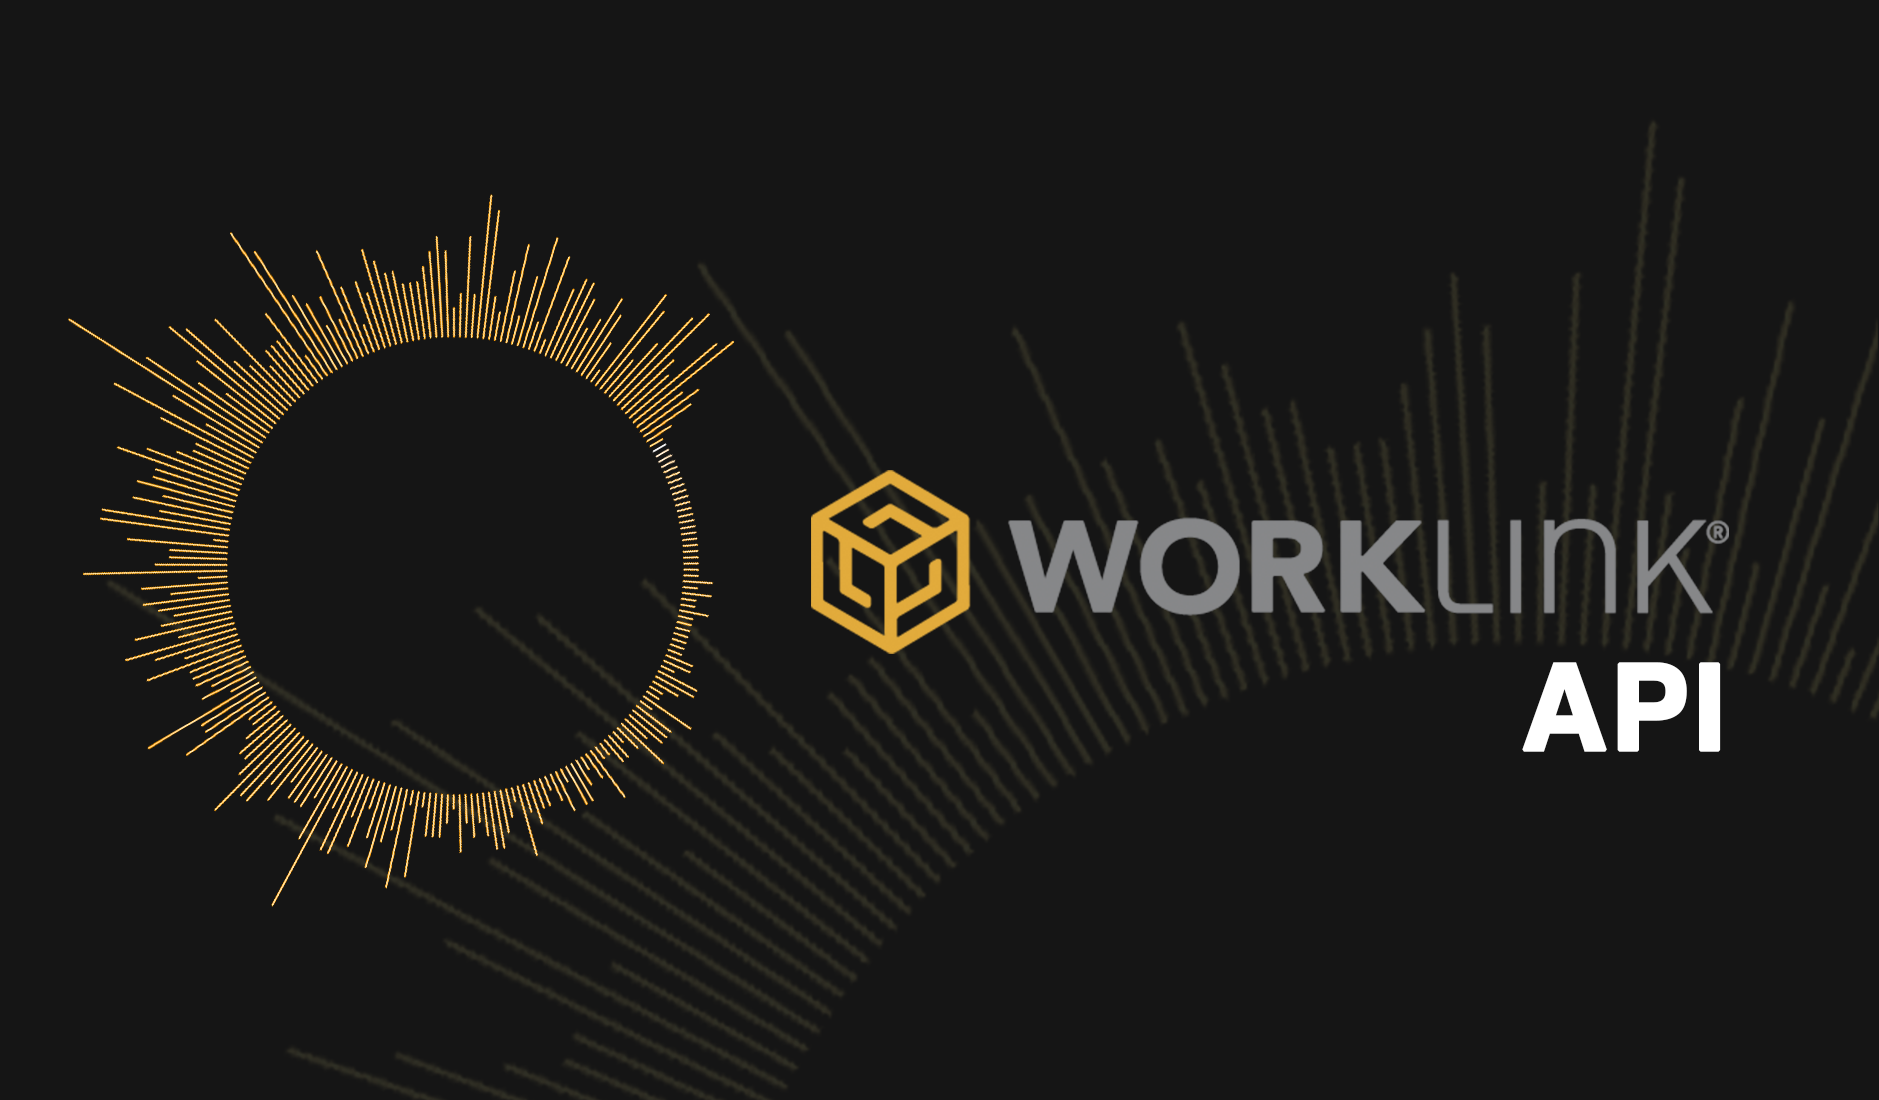 Scope AR launches new WorkLink developer platform and API